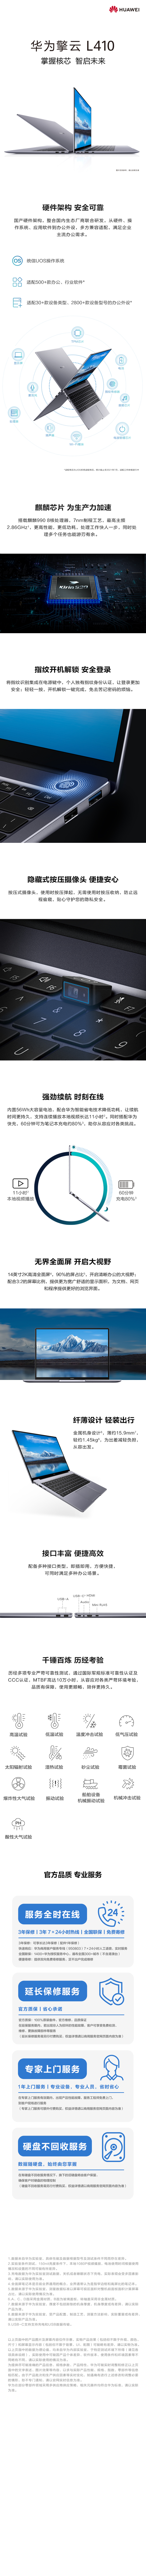 MKT_MateStation_Product Page_China Region_MKT_融合系列_电商页面_擎云L410_CN_中国区_mob_JPG_20210804.jpeg